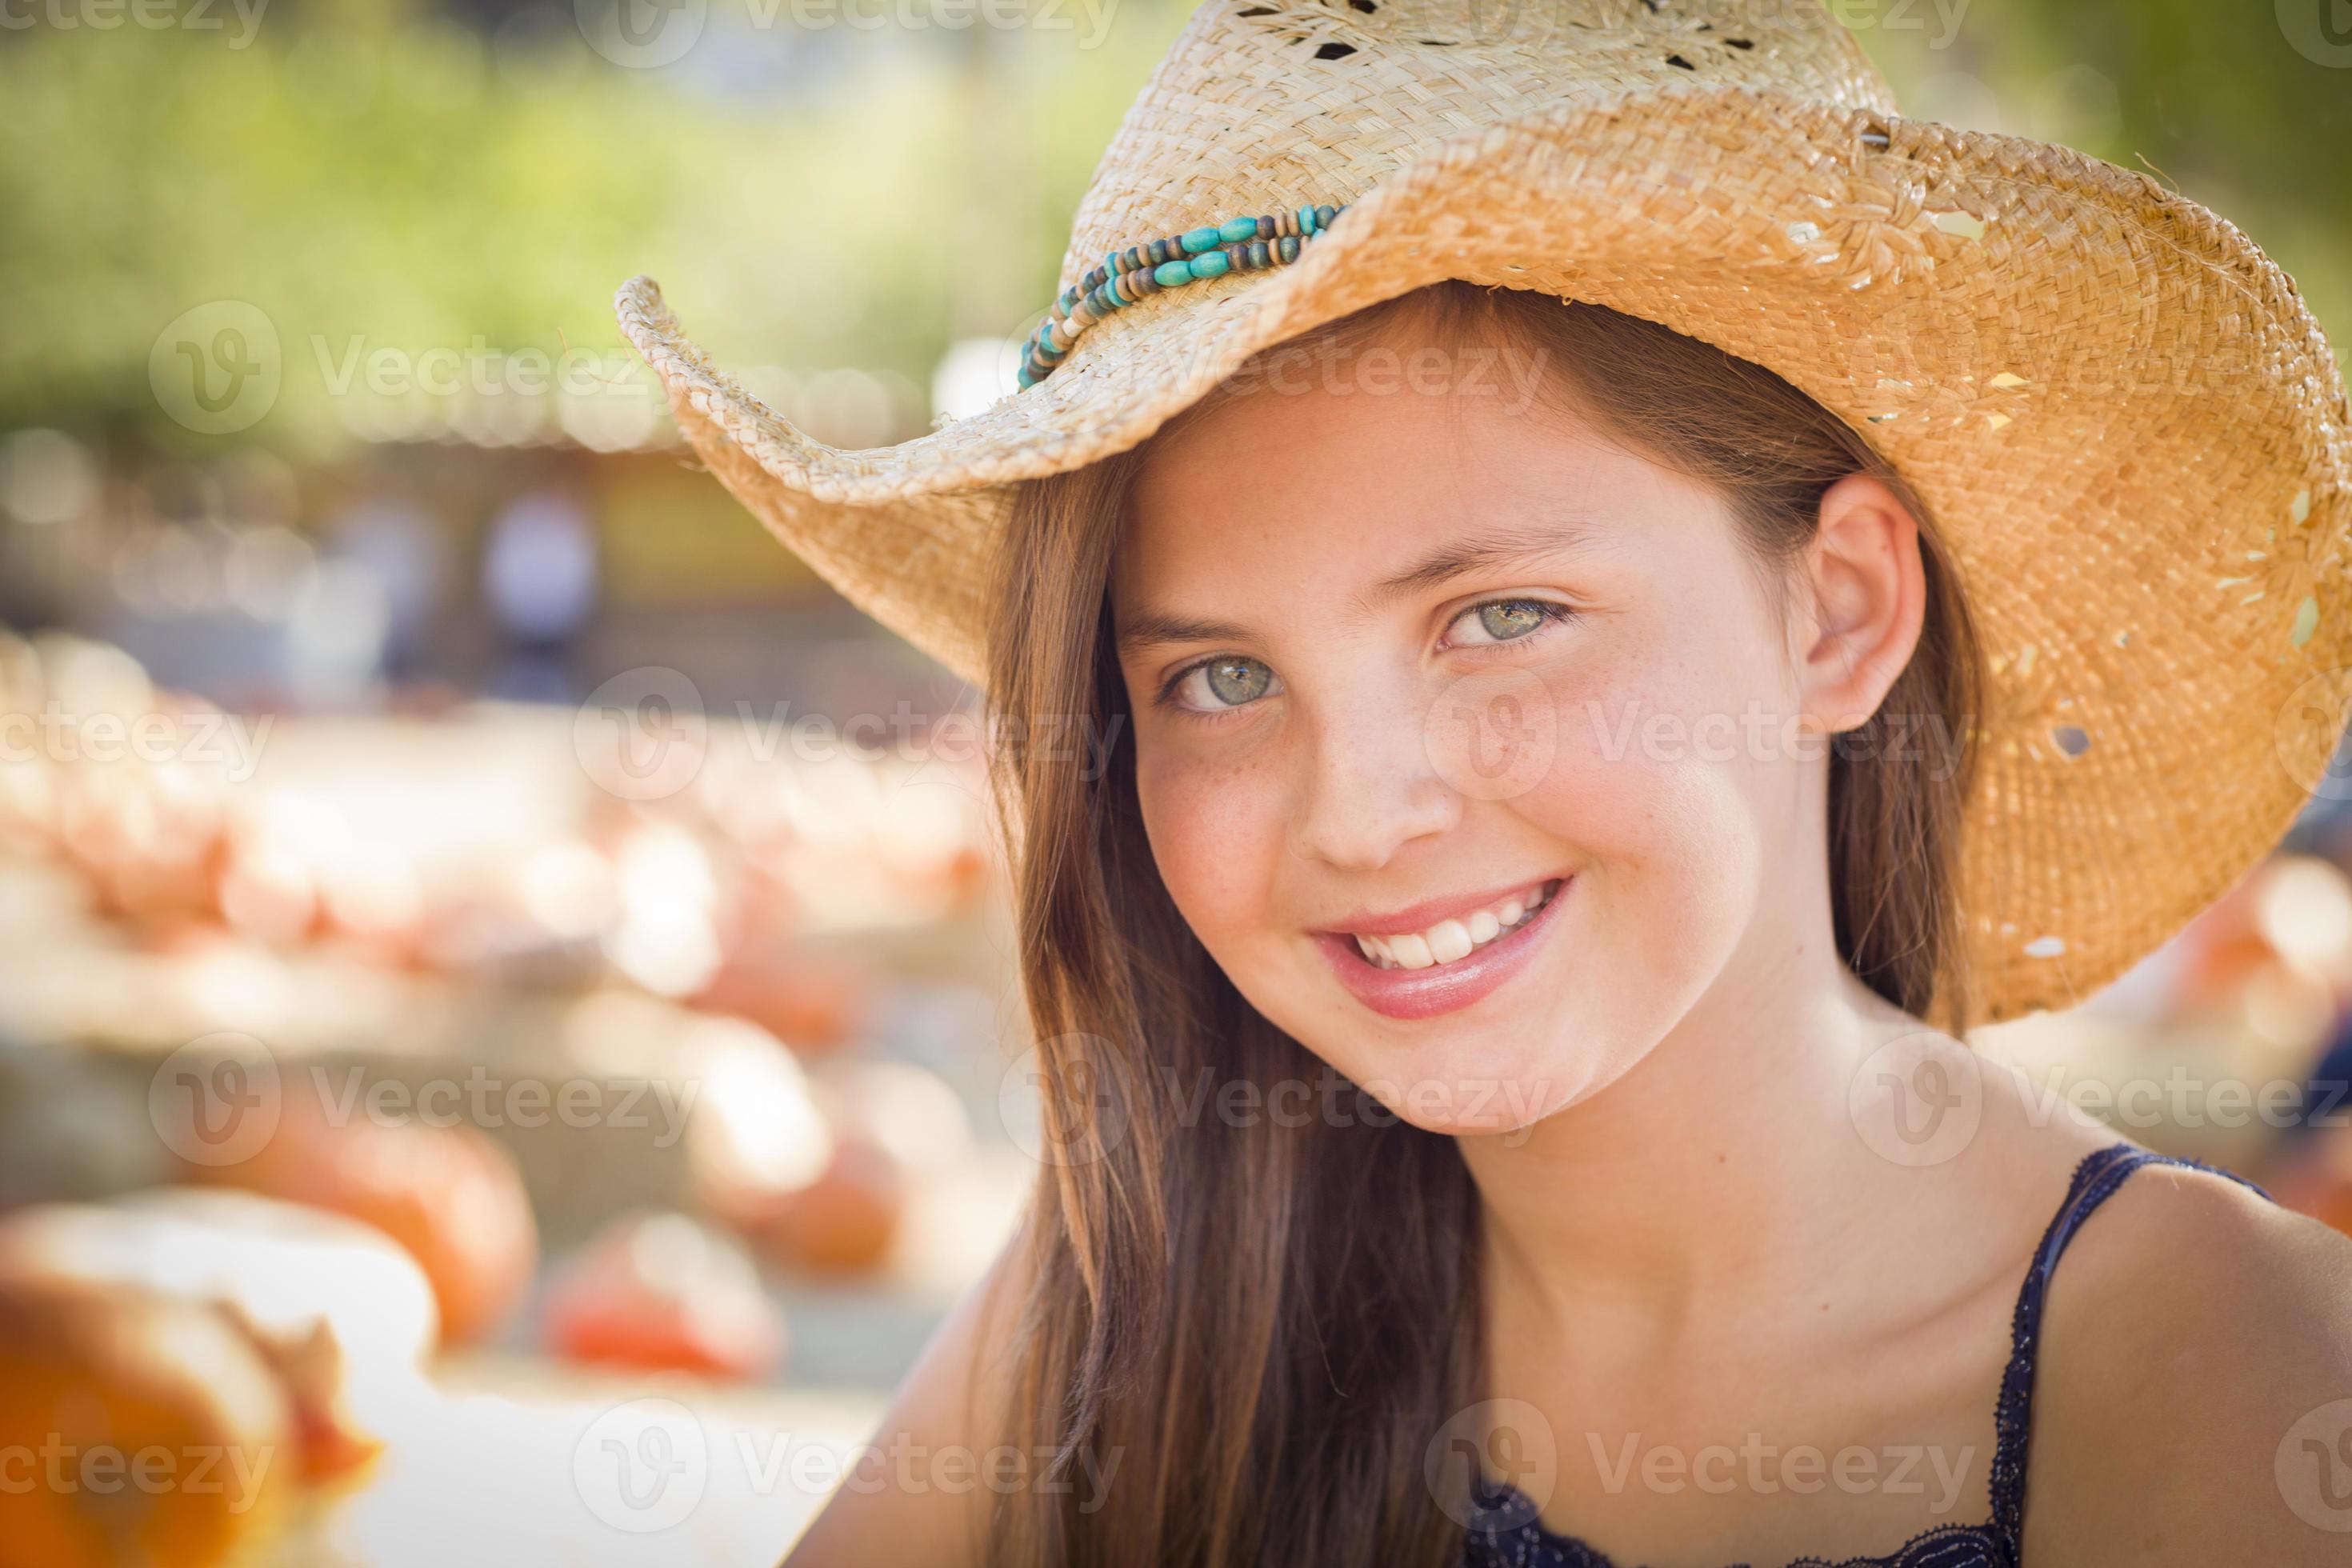 paradijs subtiel Literatuur preteen meisje portret vervelend cowboy hoed Bij pompoen lap 16358512  Stockfoto